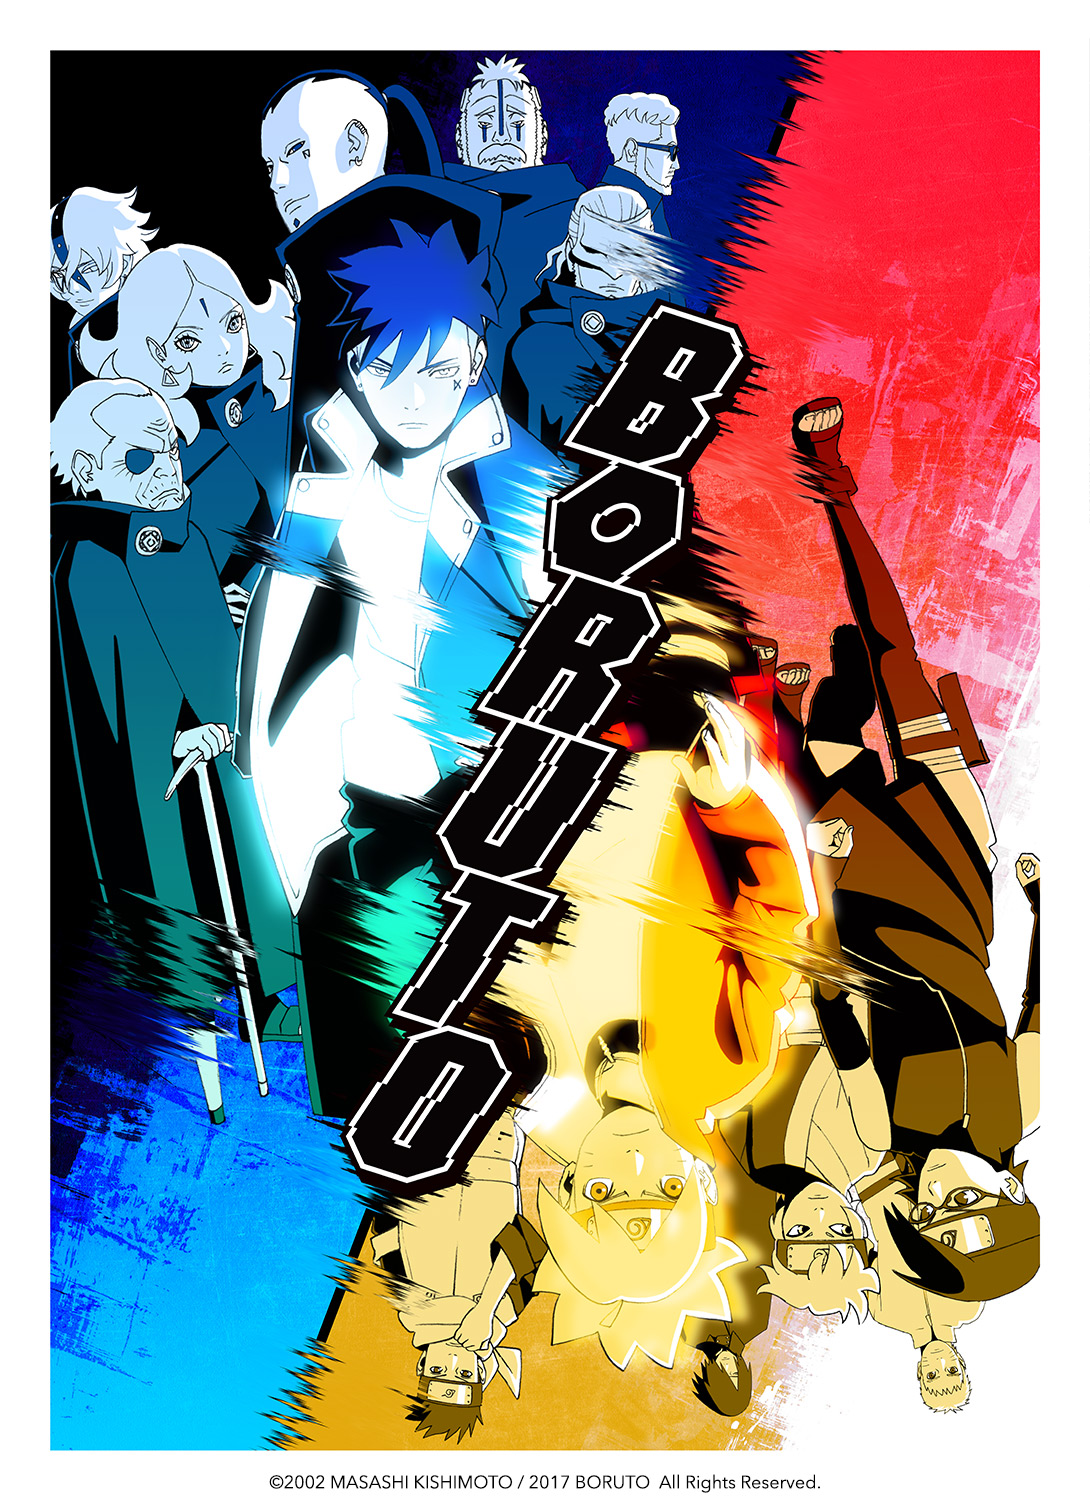 Boruto "The Vessel" Arc Announced, Kawaki Gets his Anime Debut